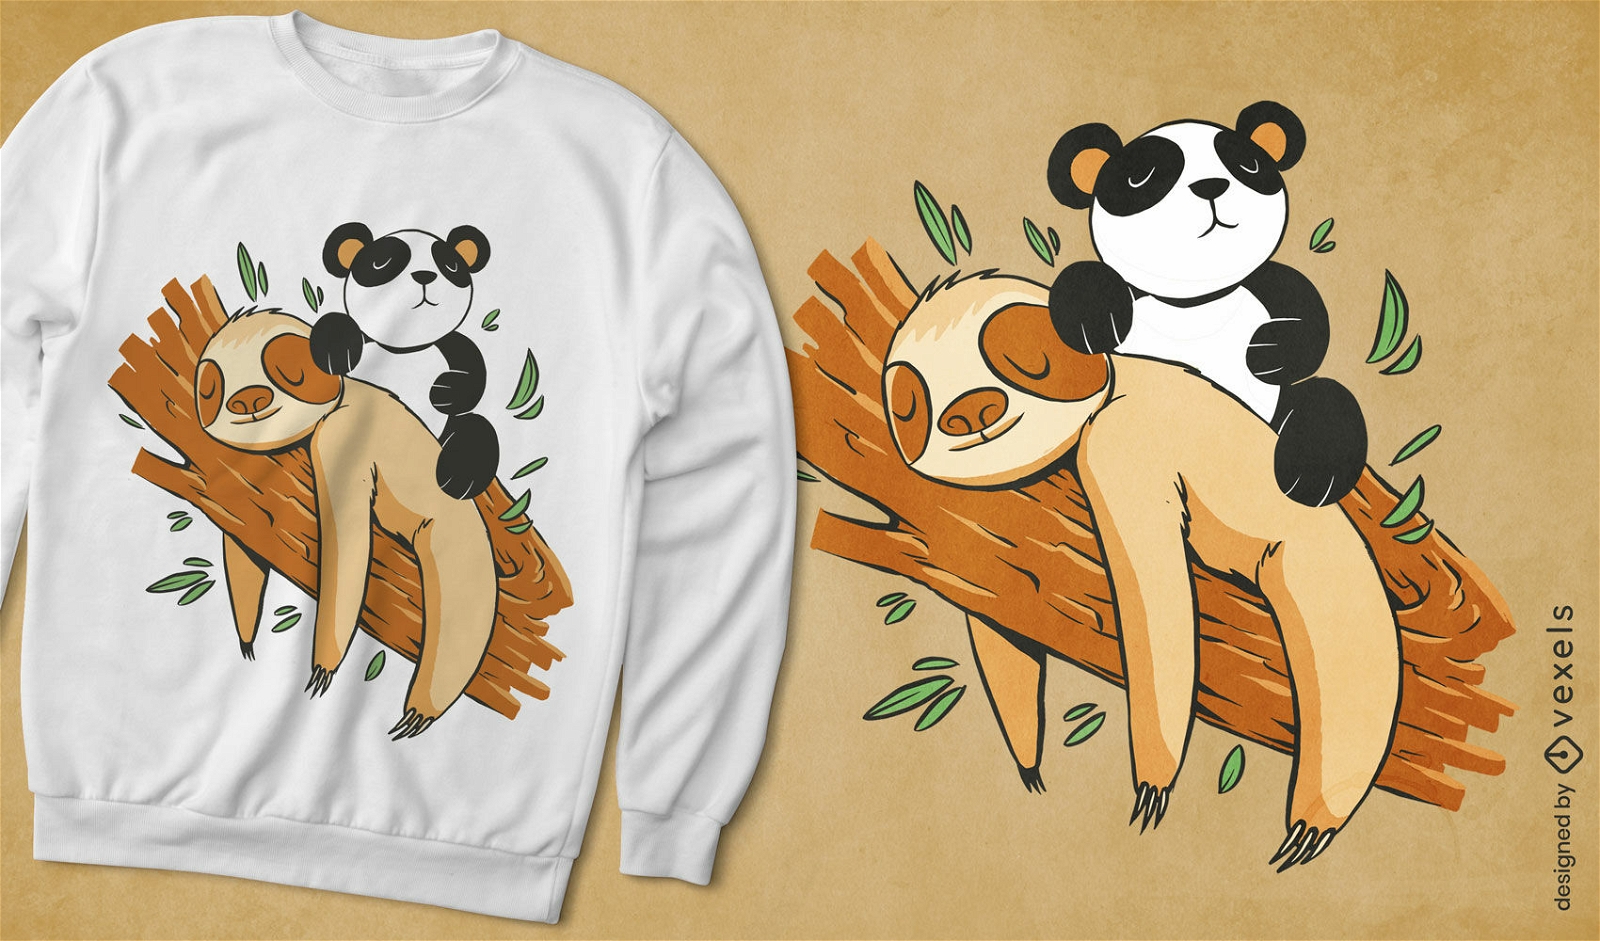 Lazy sloth and panda t-shirt design